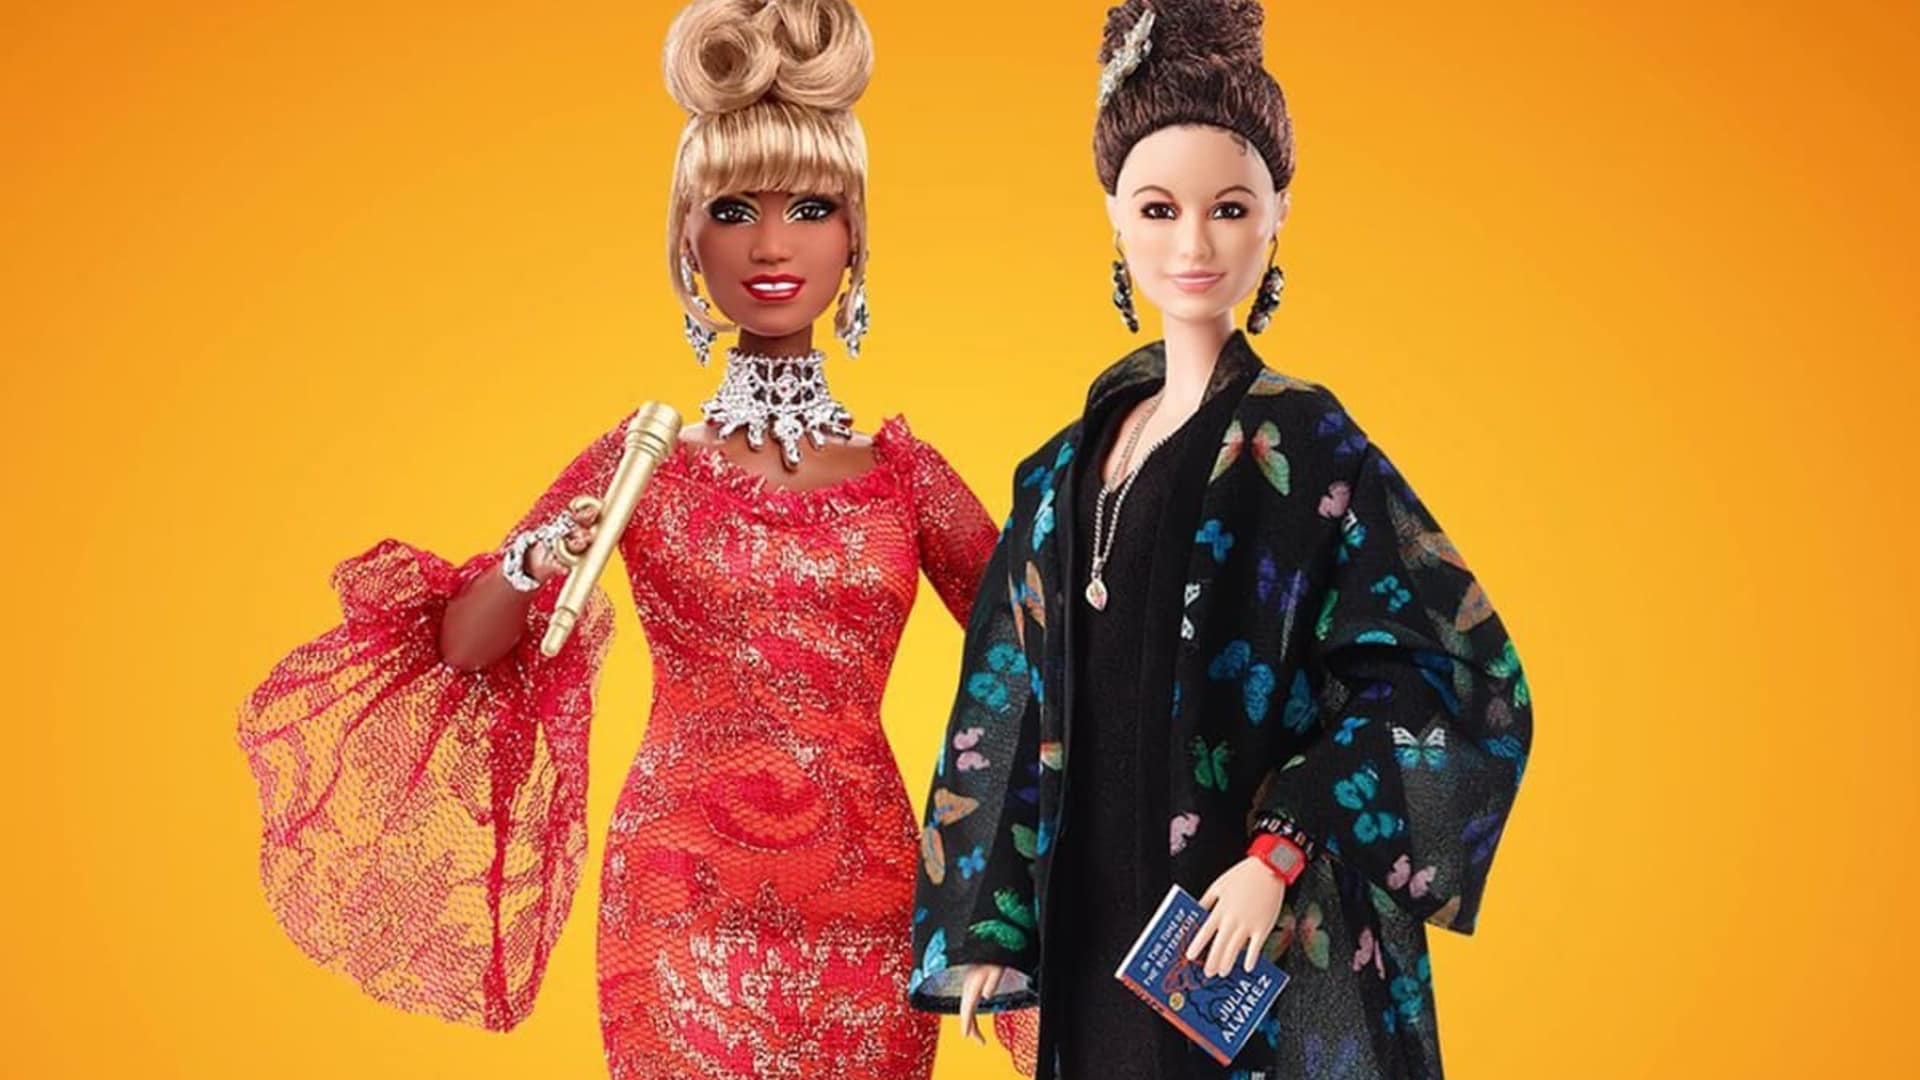 Mattel unveils a Barbie inspired by Celia Cruz and Julia Alvarez